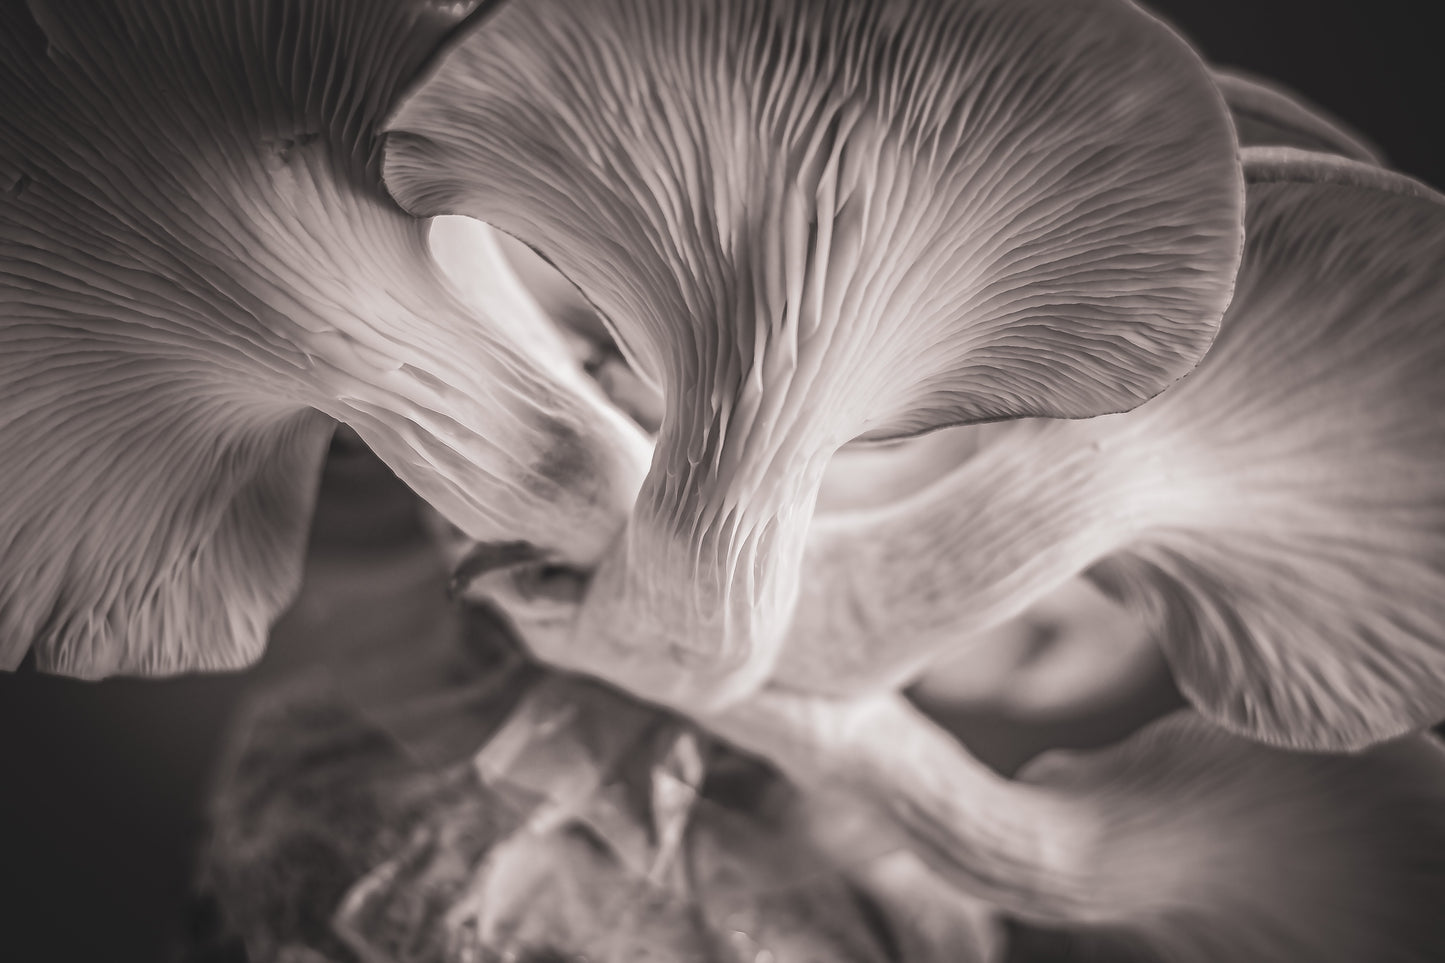 Planet Mushrooms